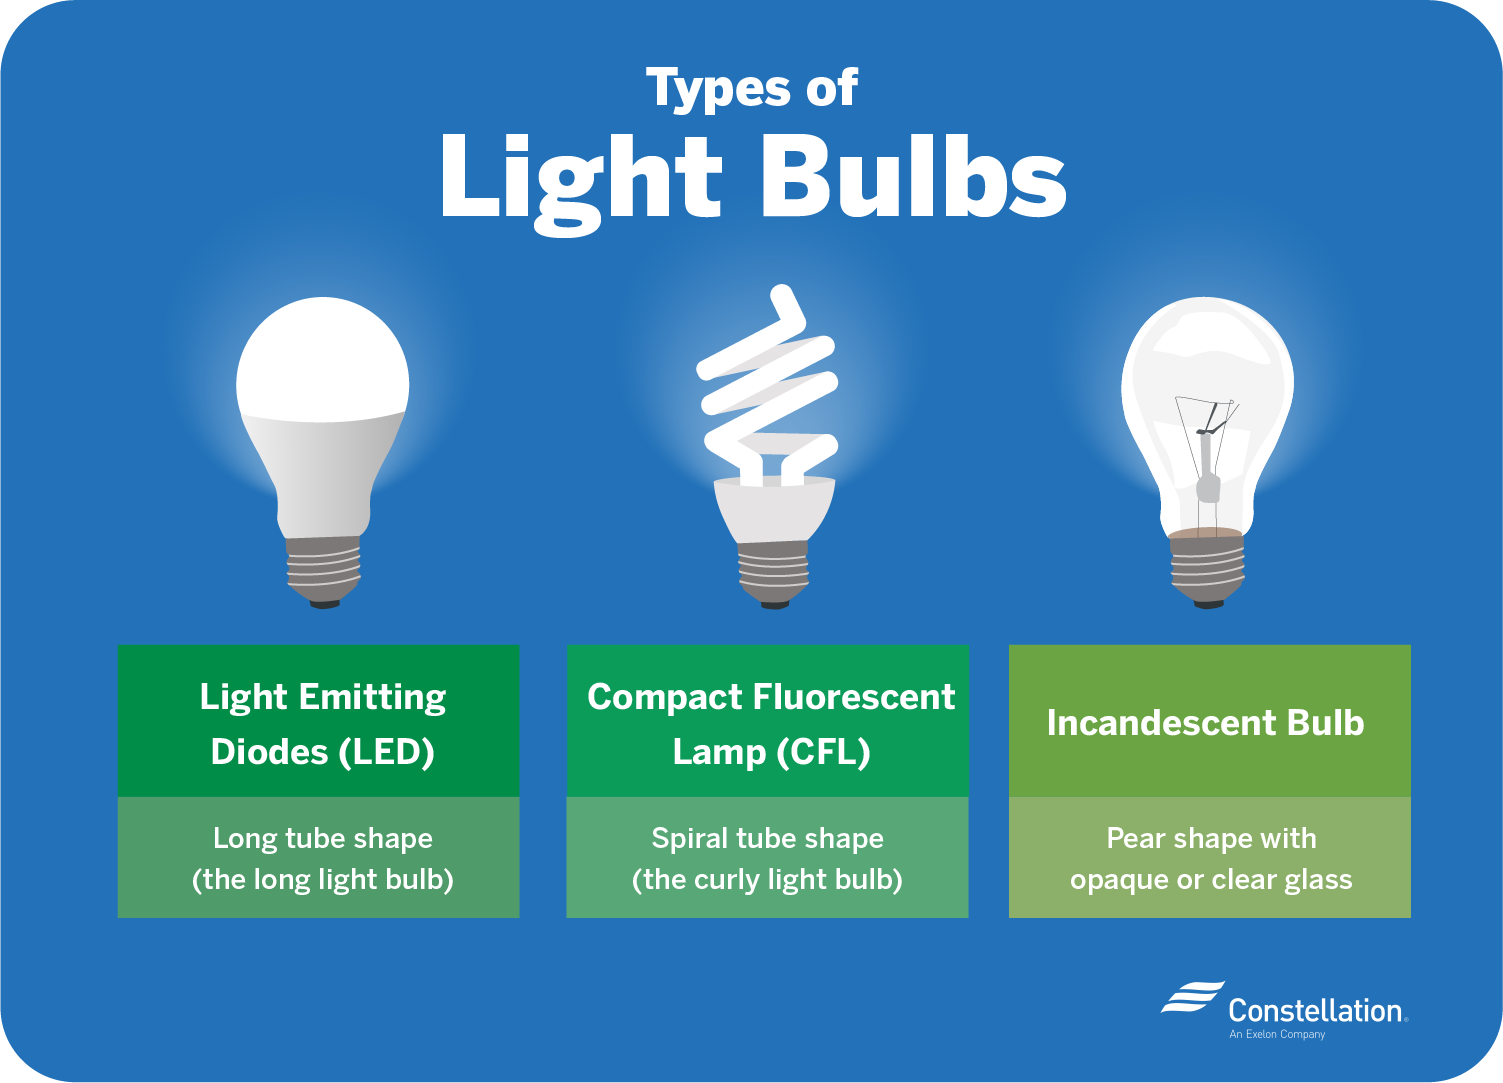 Types of lightbulbs: LED, CFL, Incandescent 